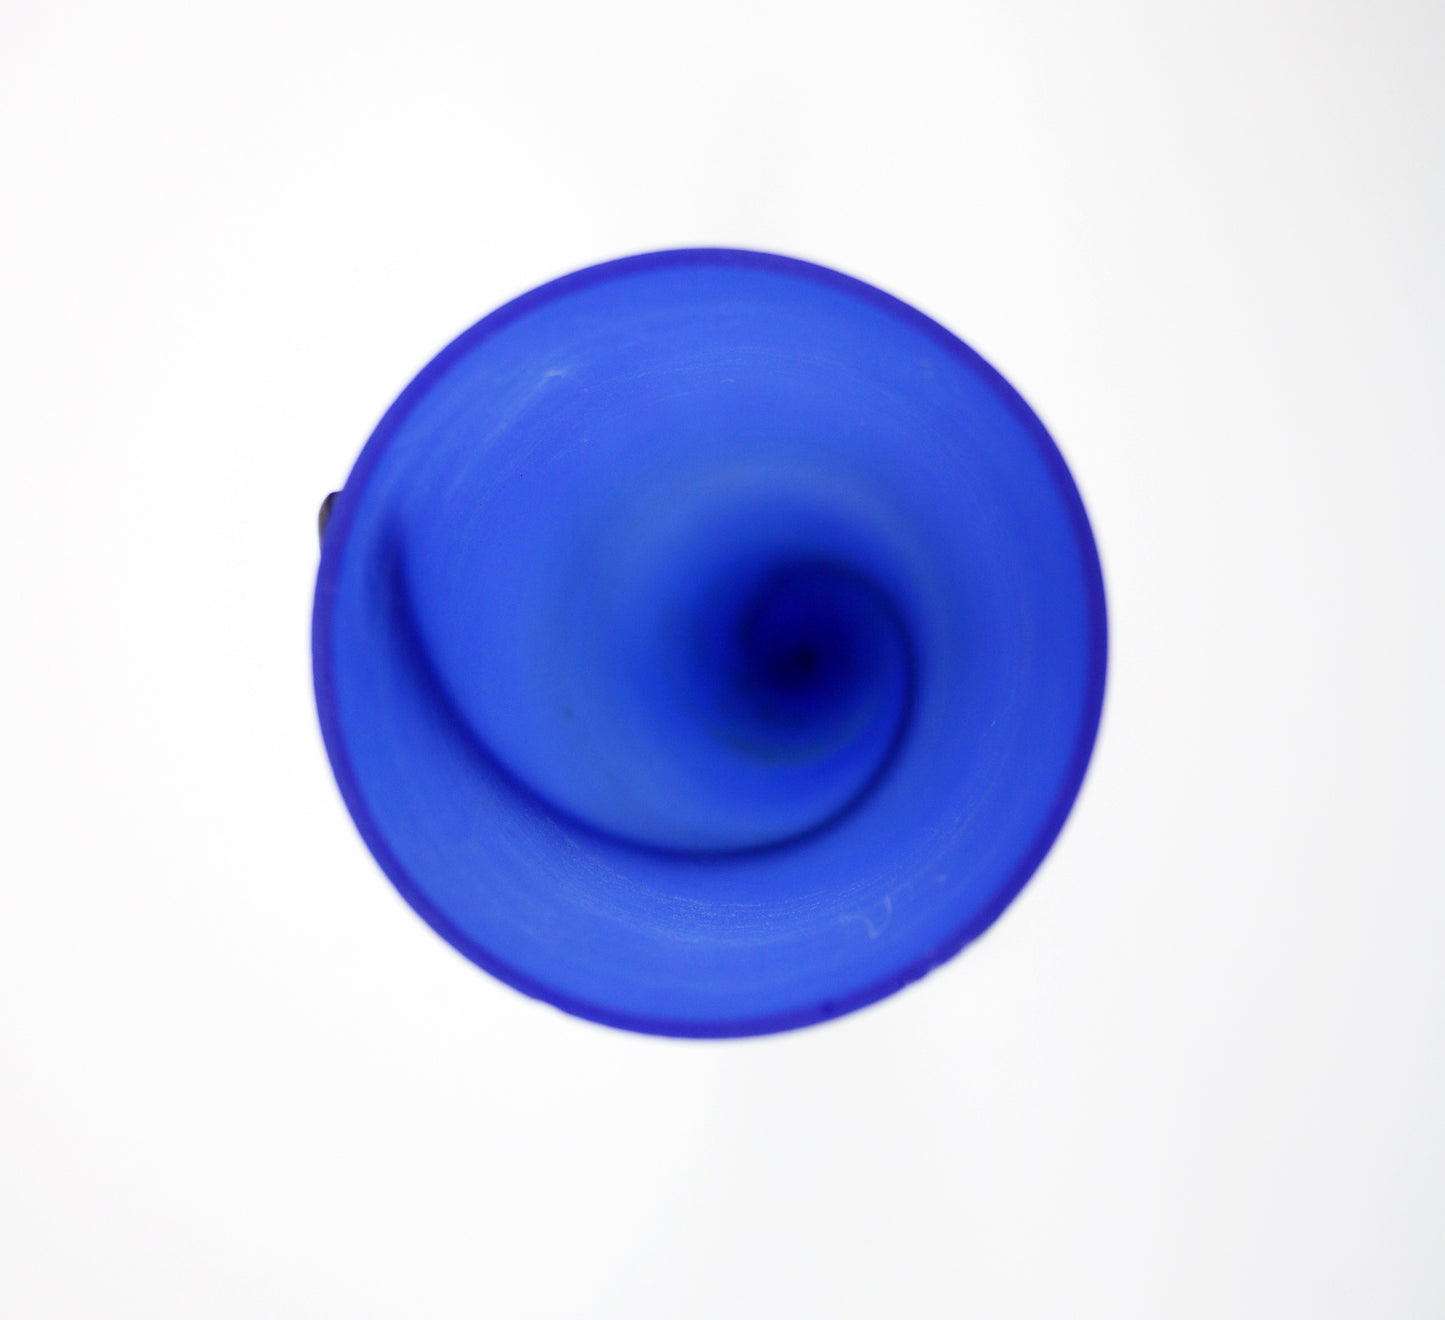 Deep blue glass cone vase in metal spiral holder - 24cm